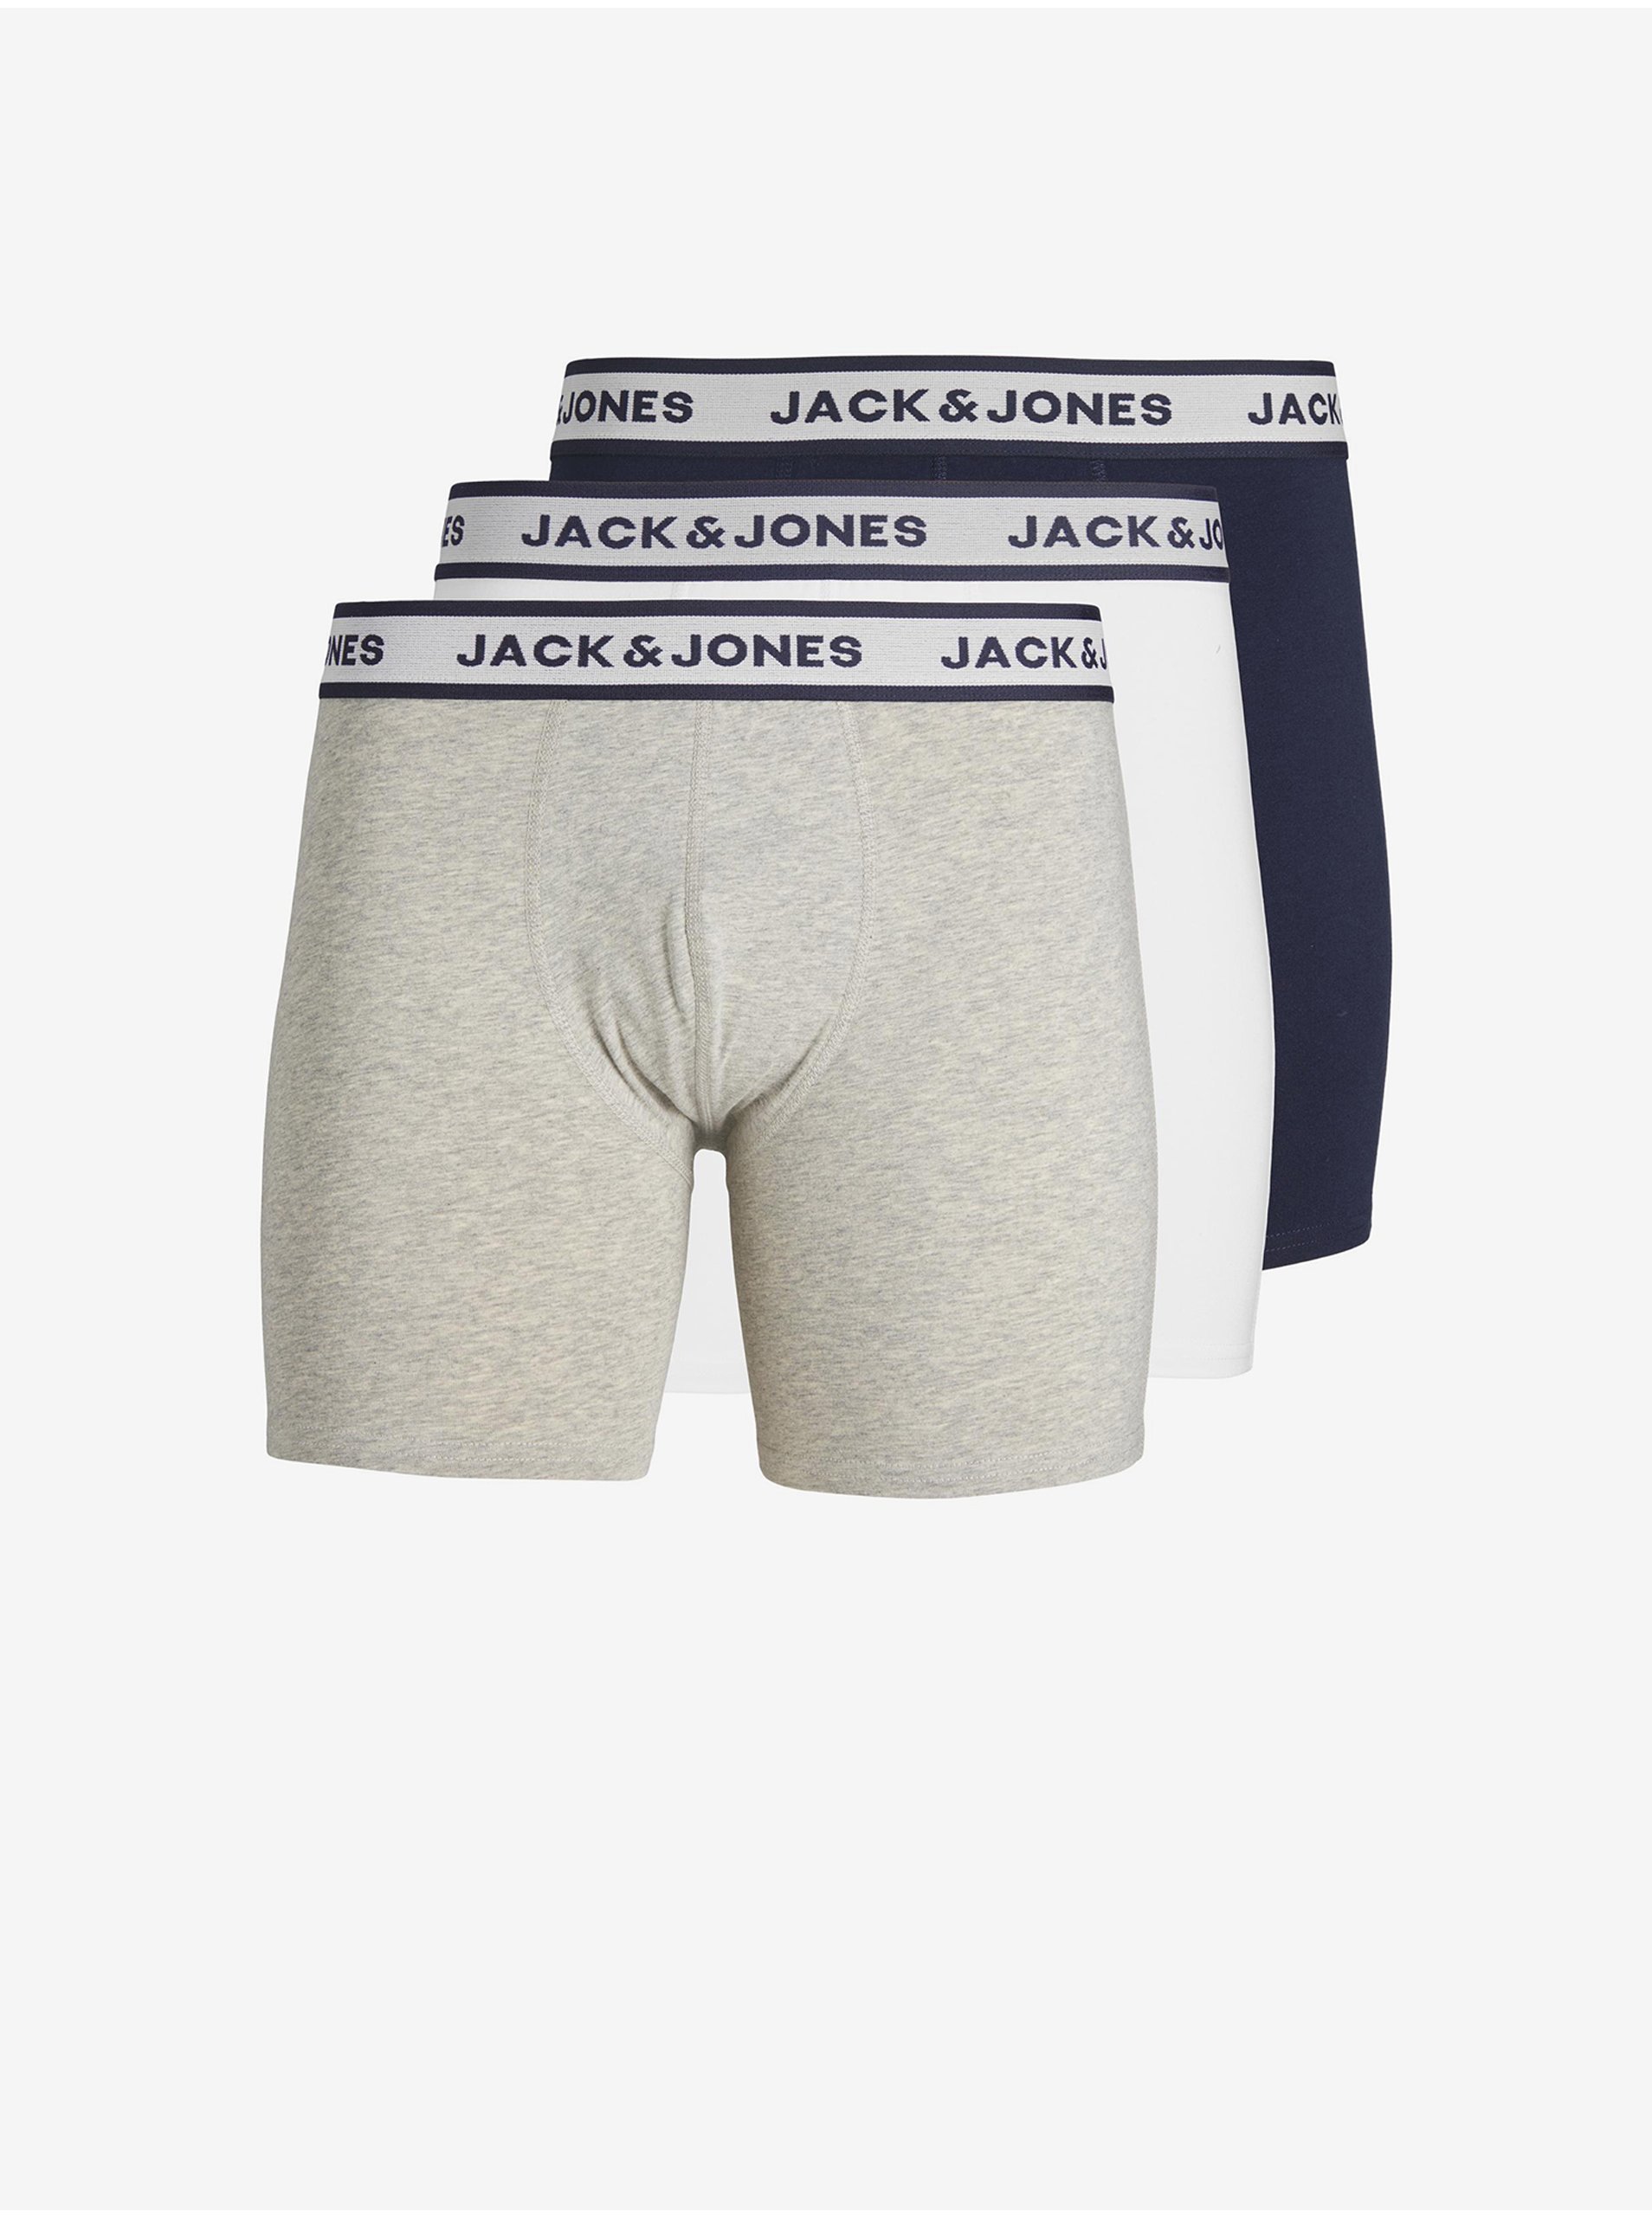 Jack & Jones Set of three men's boxers in light gray, white and dark blue bar - Men